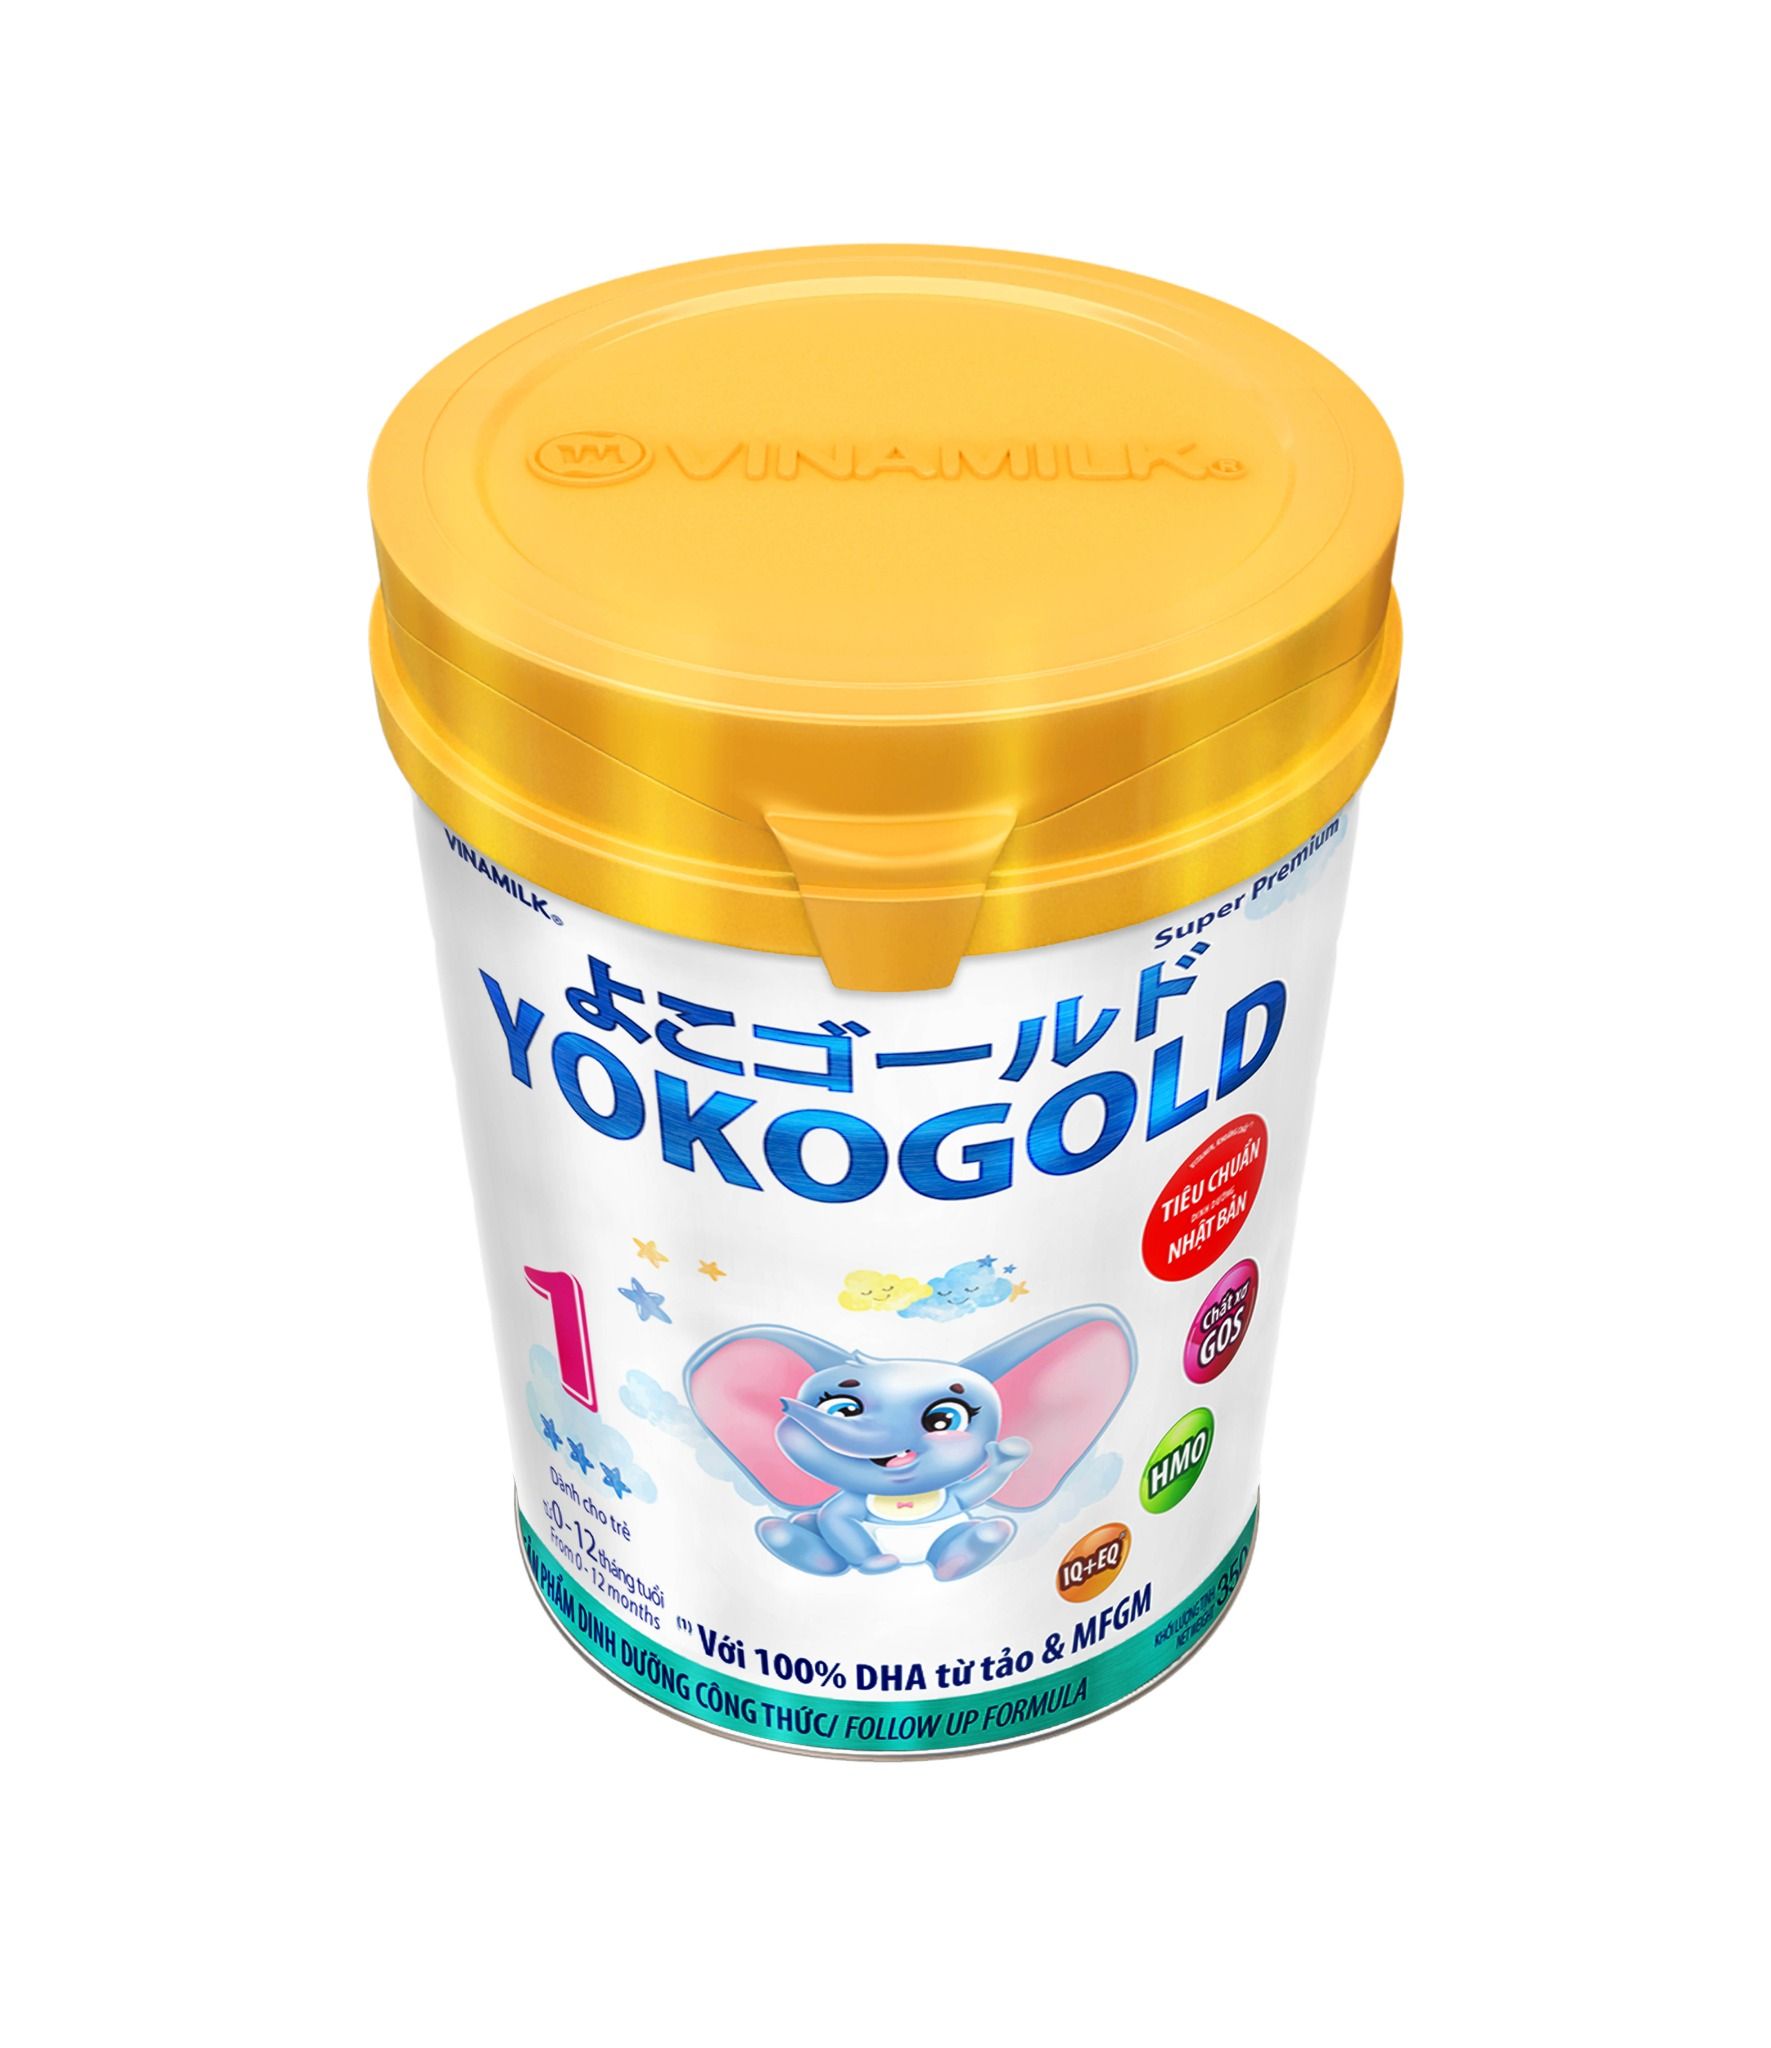 Sữa bột YOKOGOLD 1 - lon 350g (cho trẻ từ 0 - 1 tuổi)